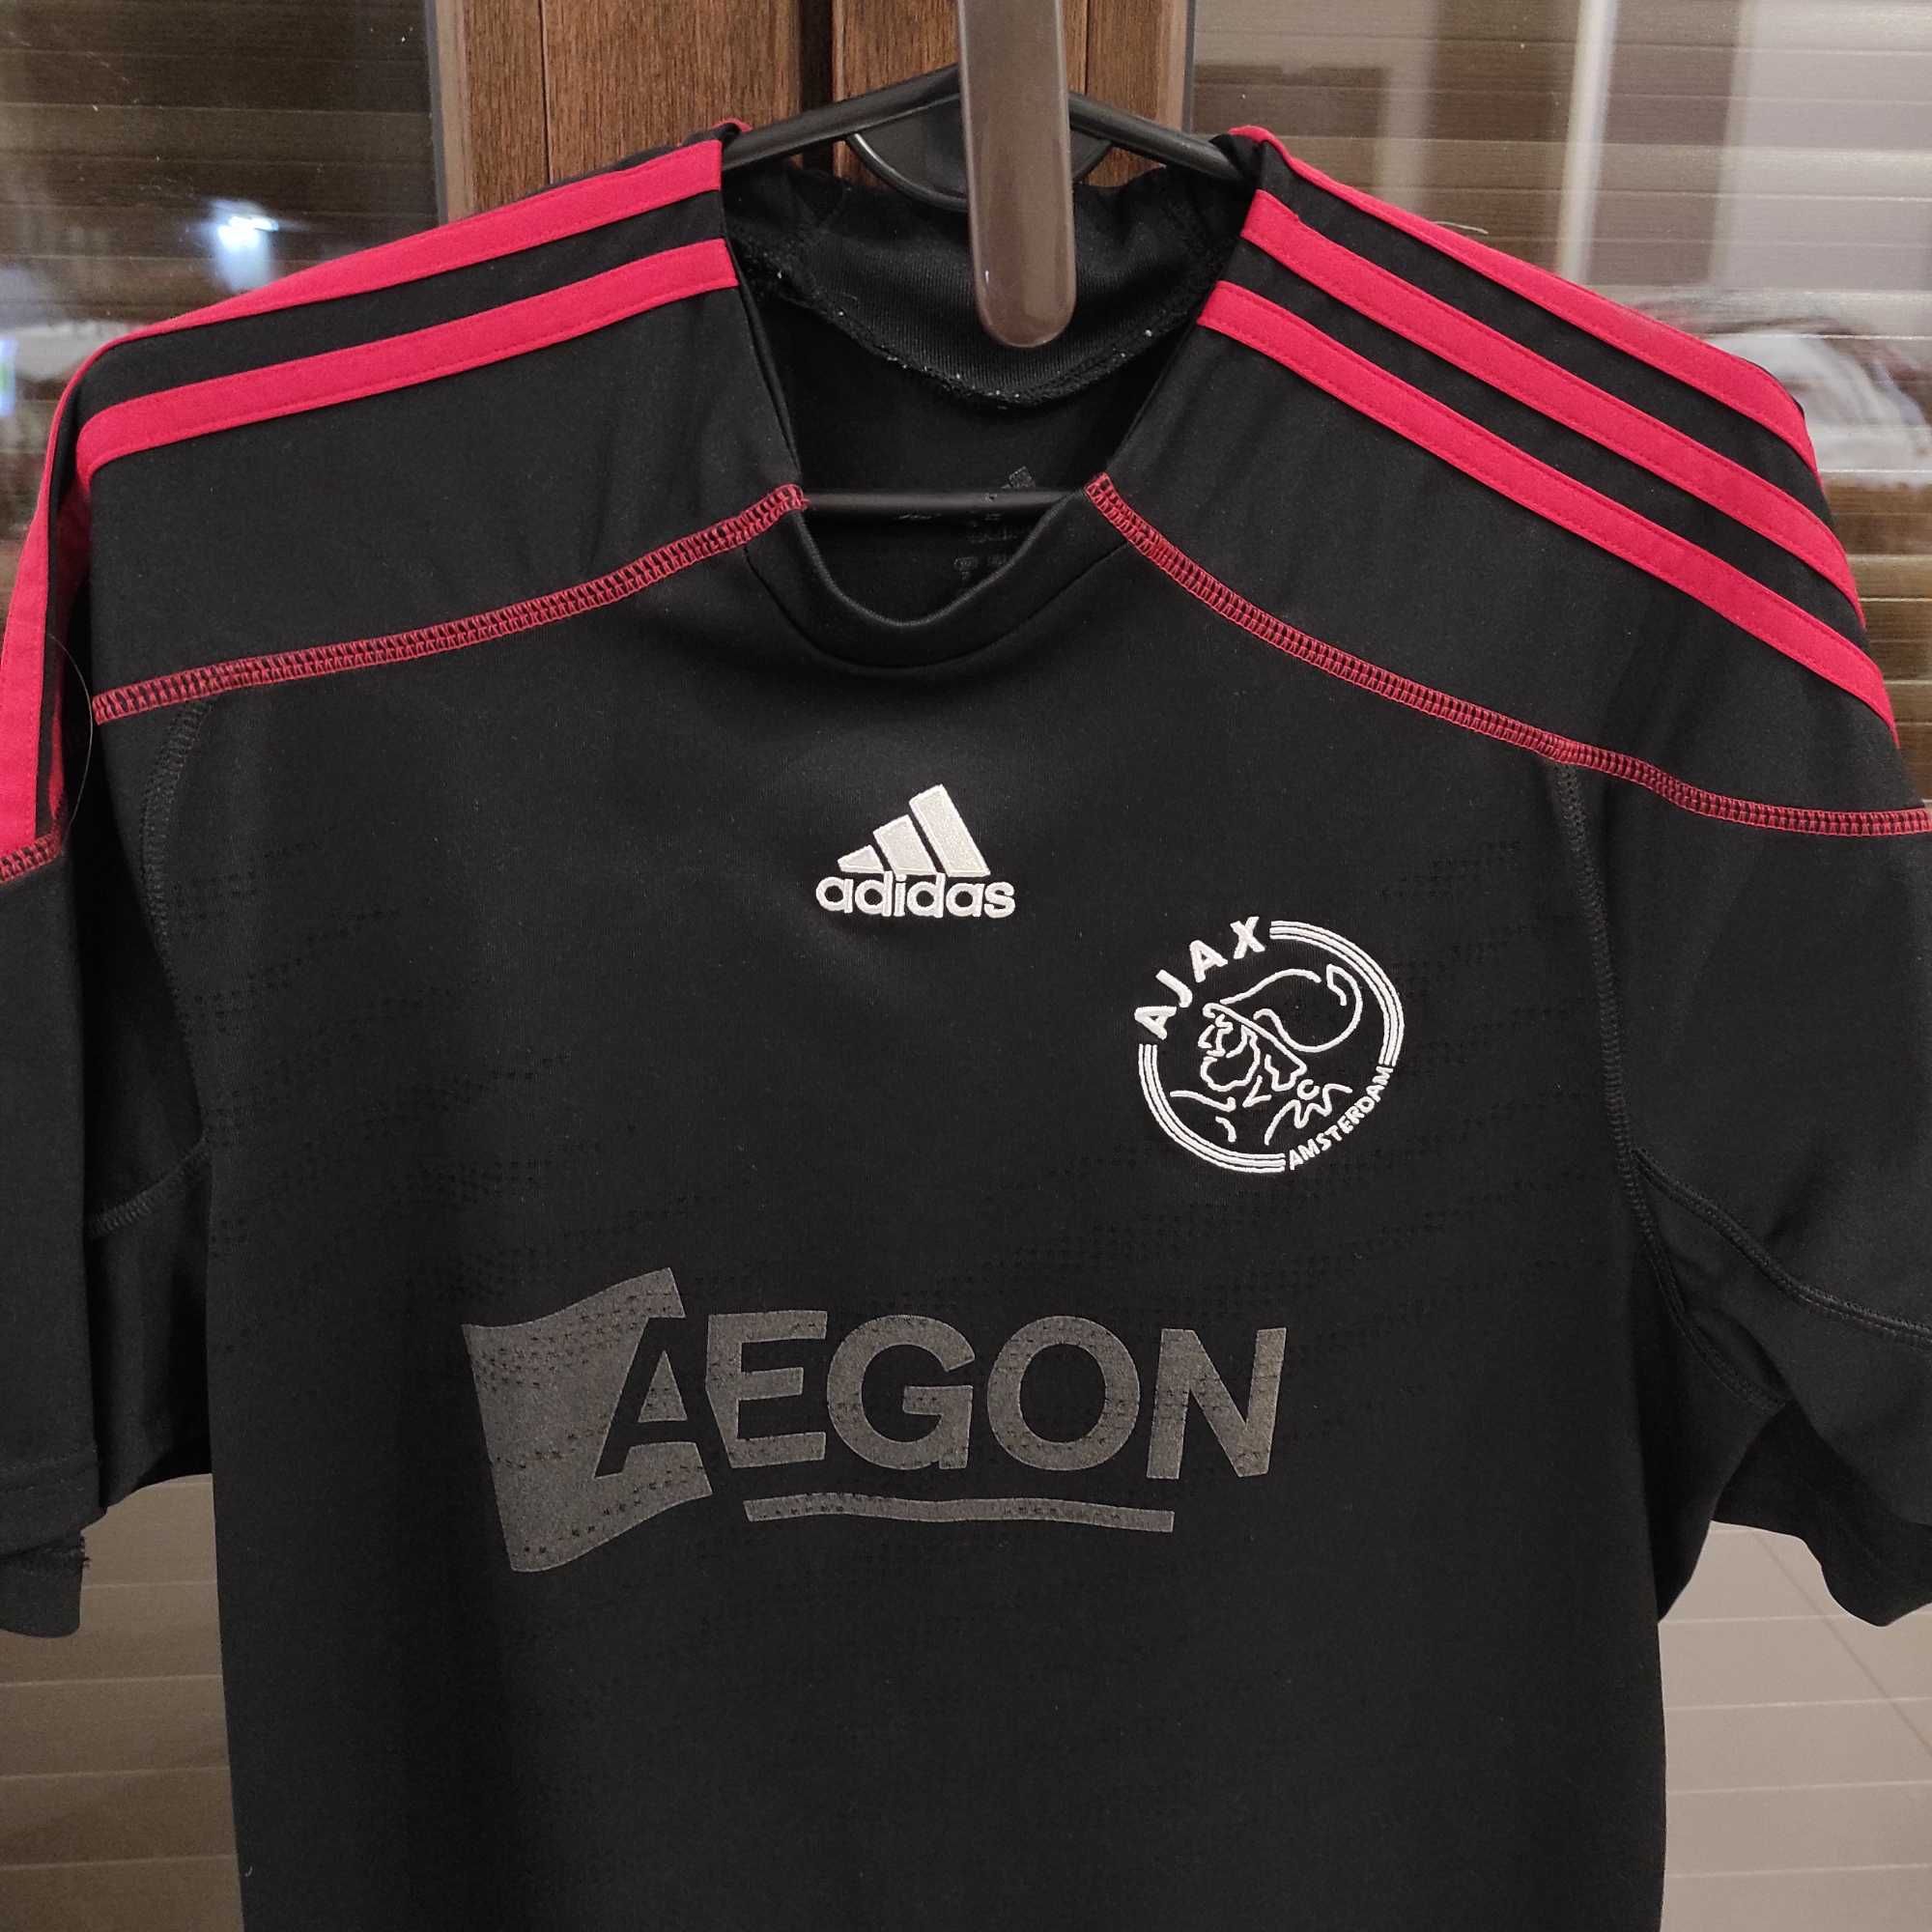 Adidas Koszulka Piłkarska AFC Ajax Amsterdam Eredivisie